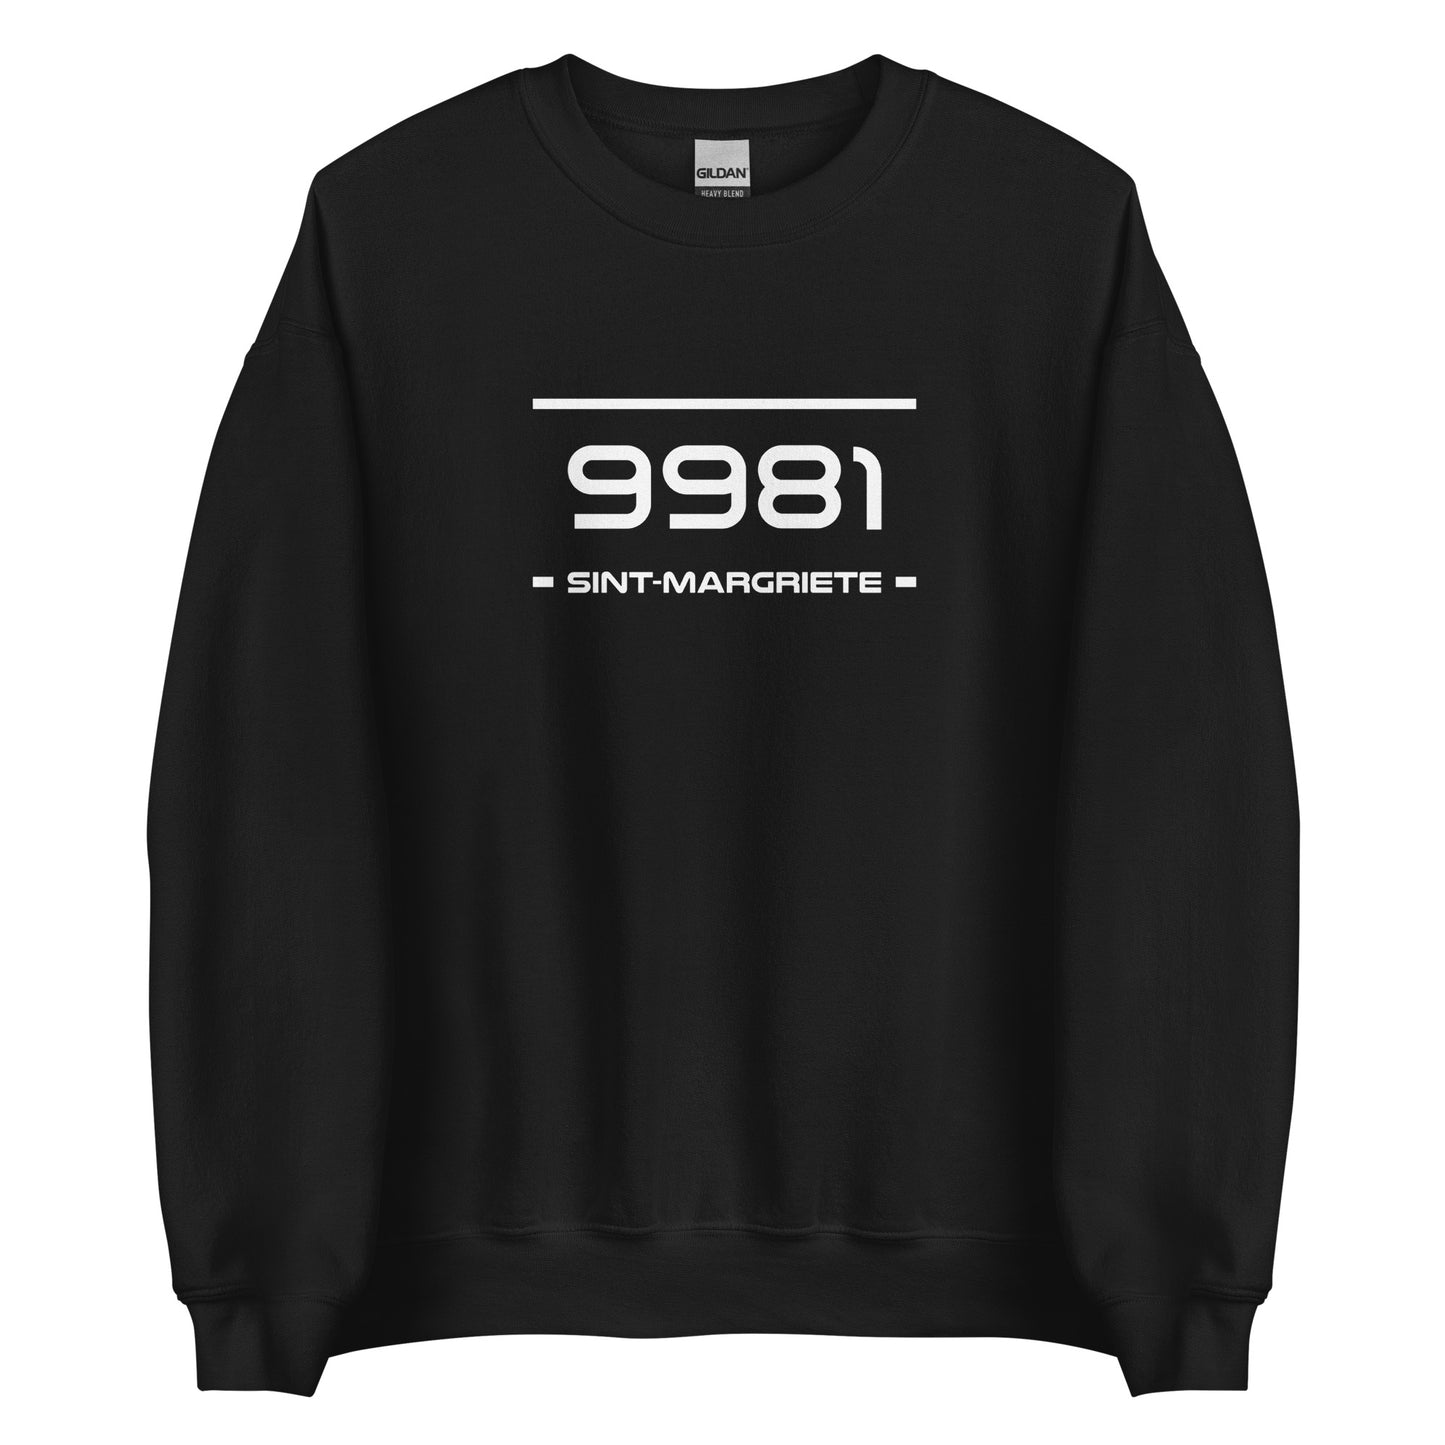 Sweater - 9881 - Sint-Margriete (M/V)